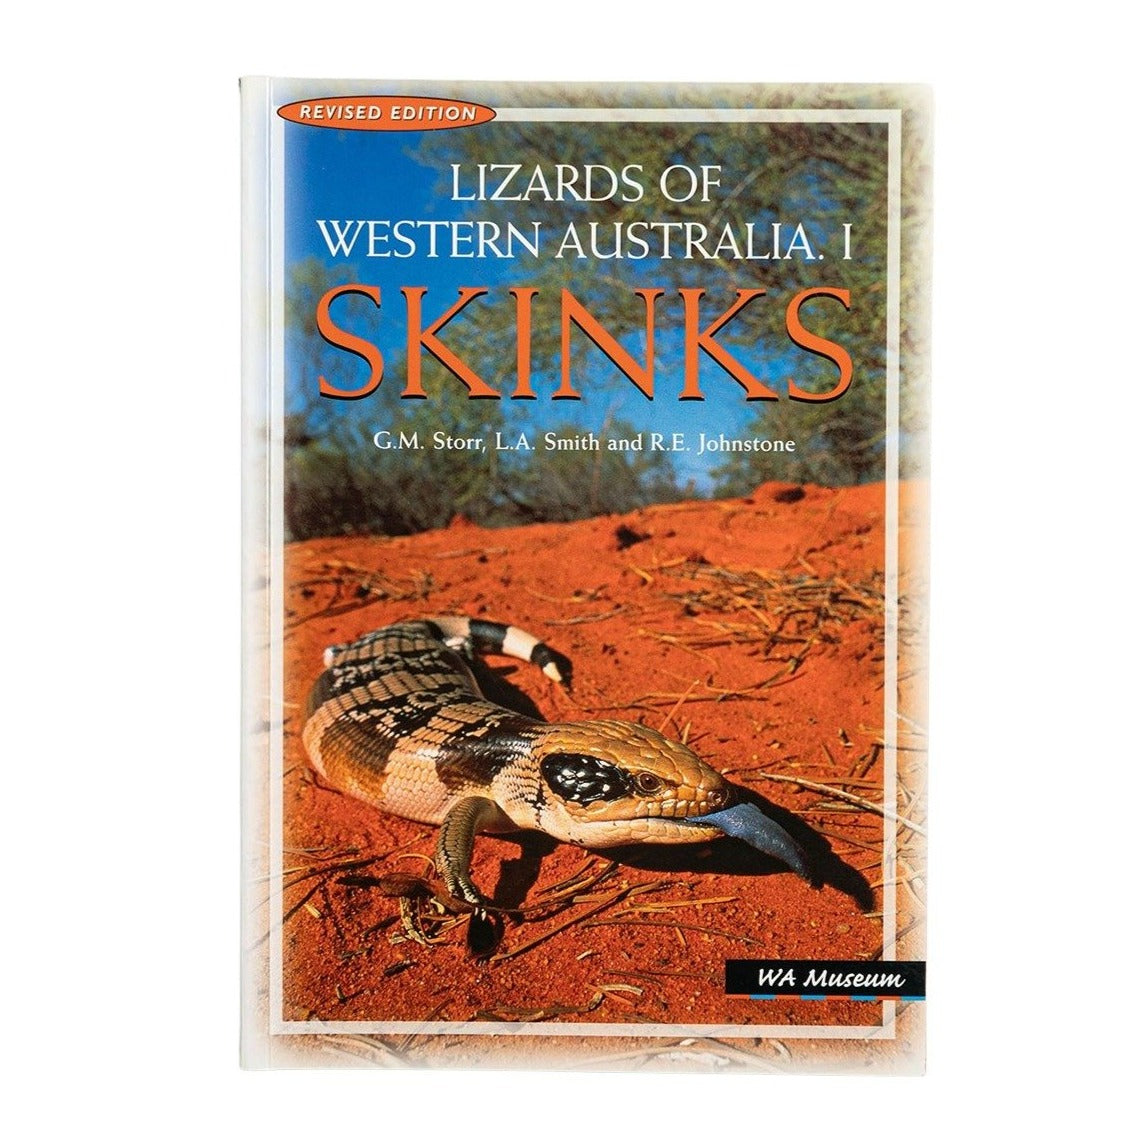 Lizards of Western Australia Vol 1 Skinks